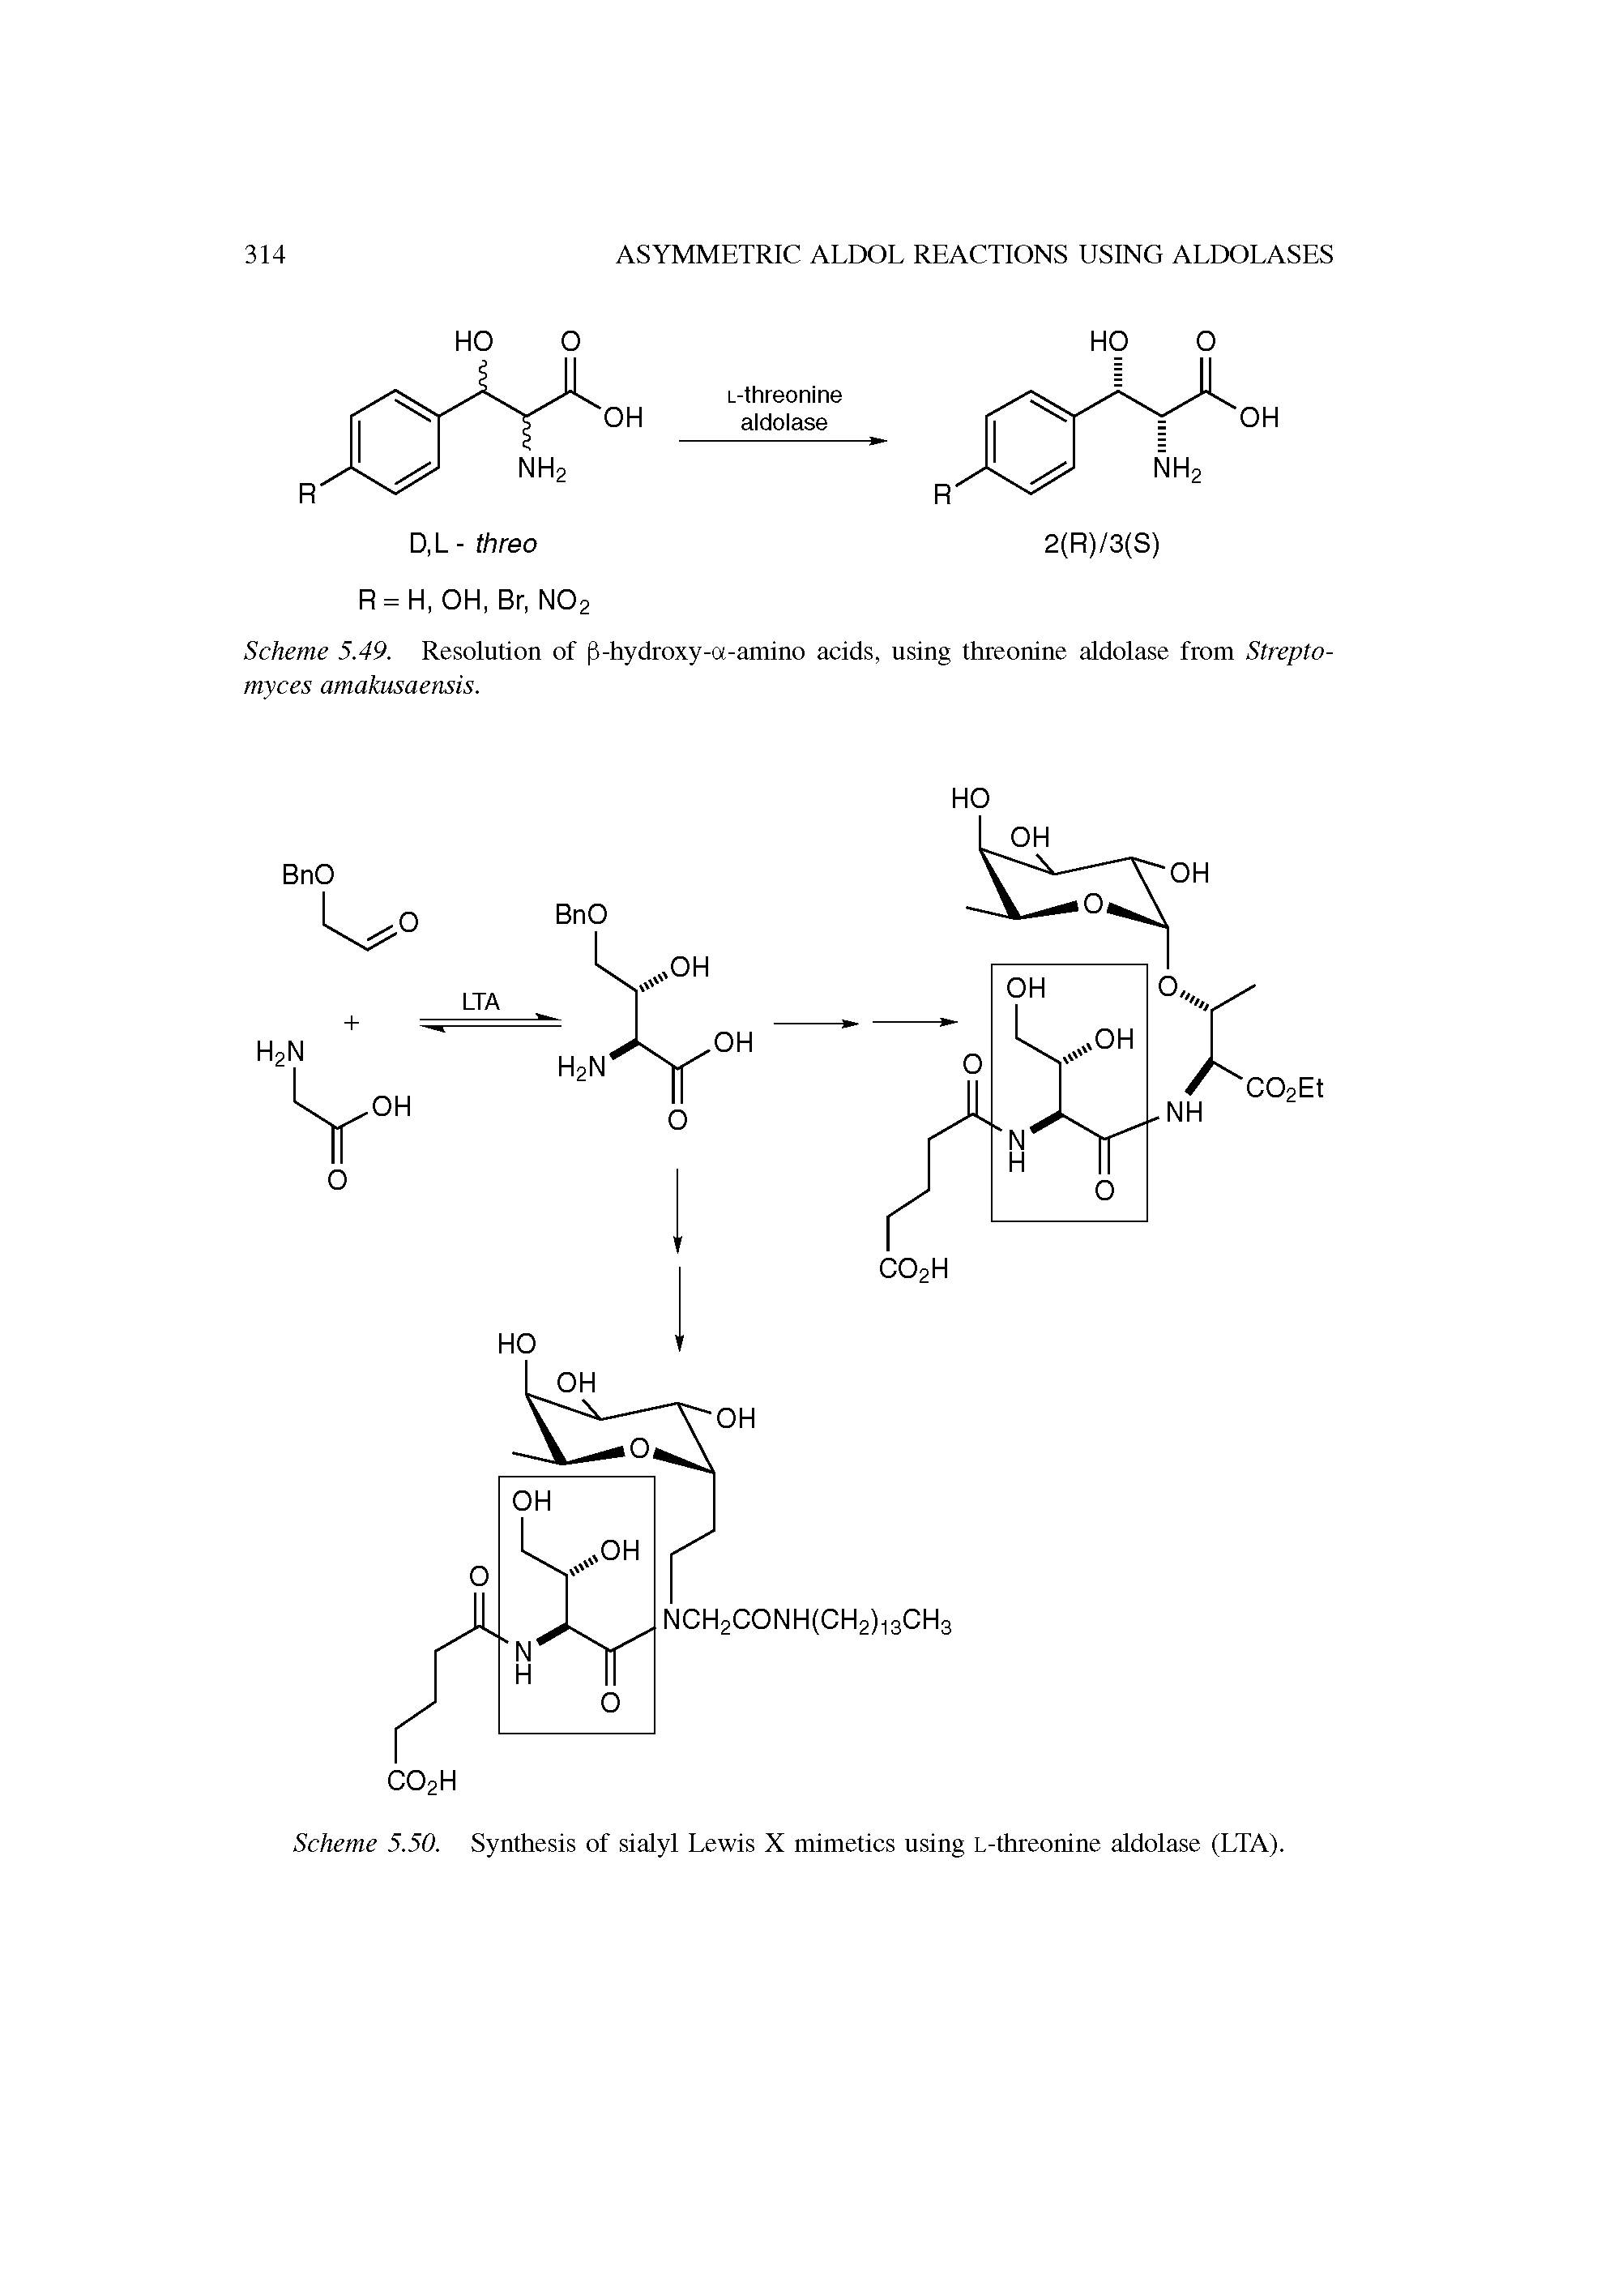 Scheme 5.50. Synthesis of sialyl Lewis X mimetics using L-threonine aldolase (LTA).